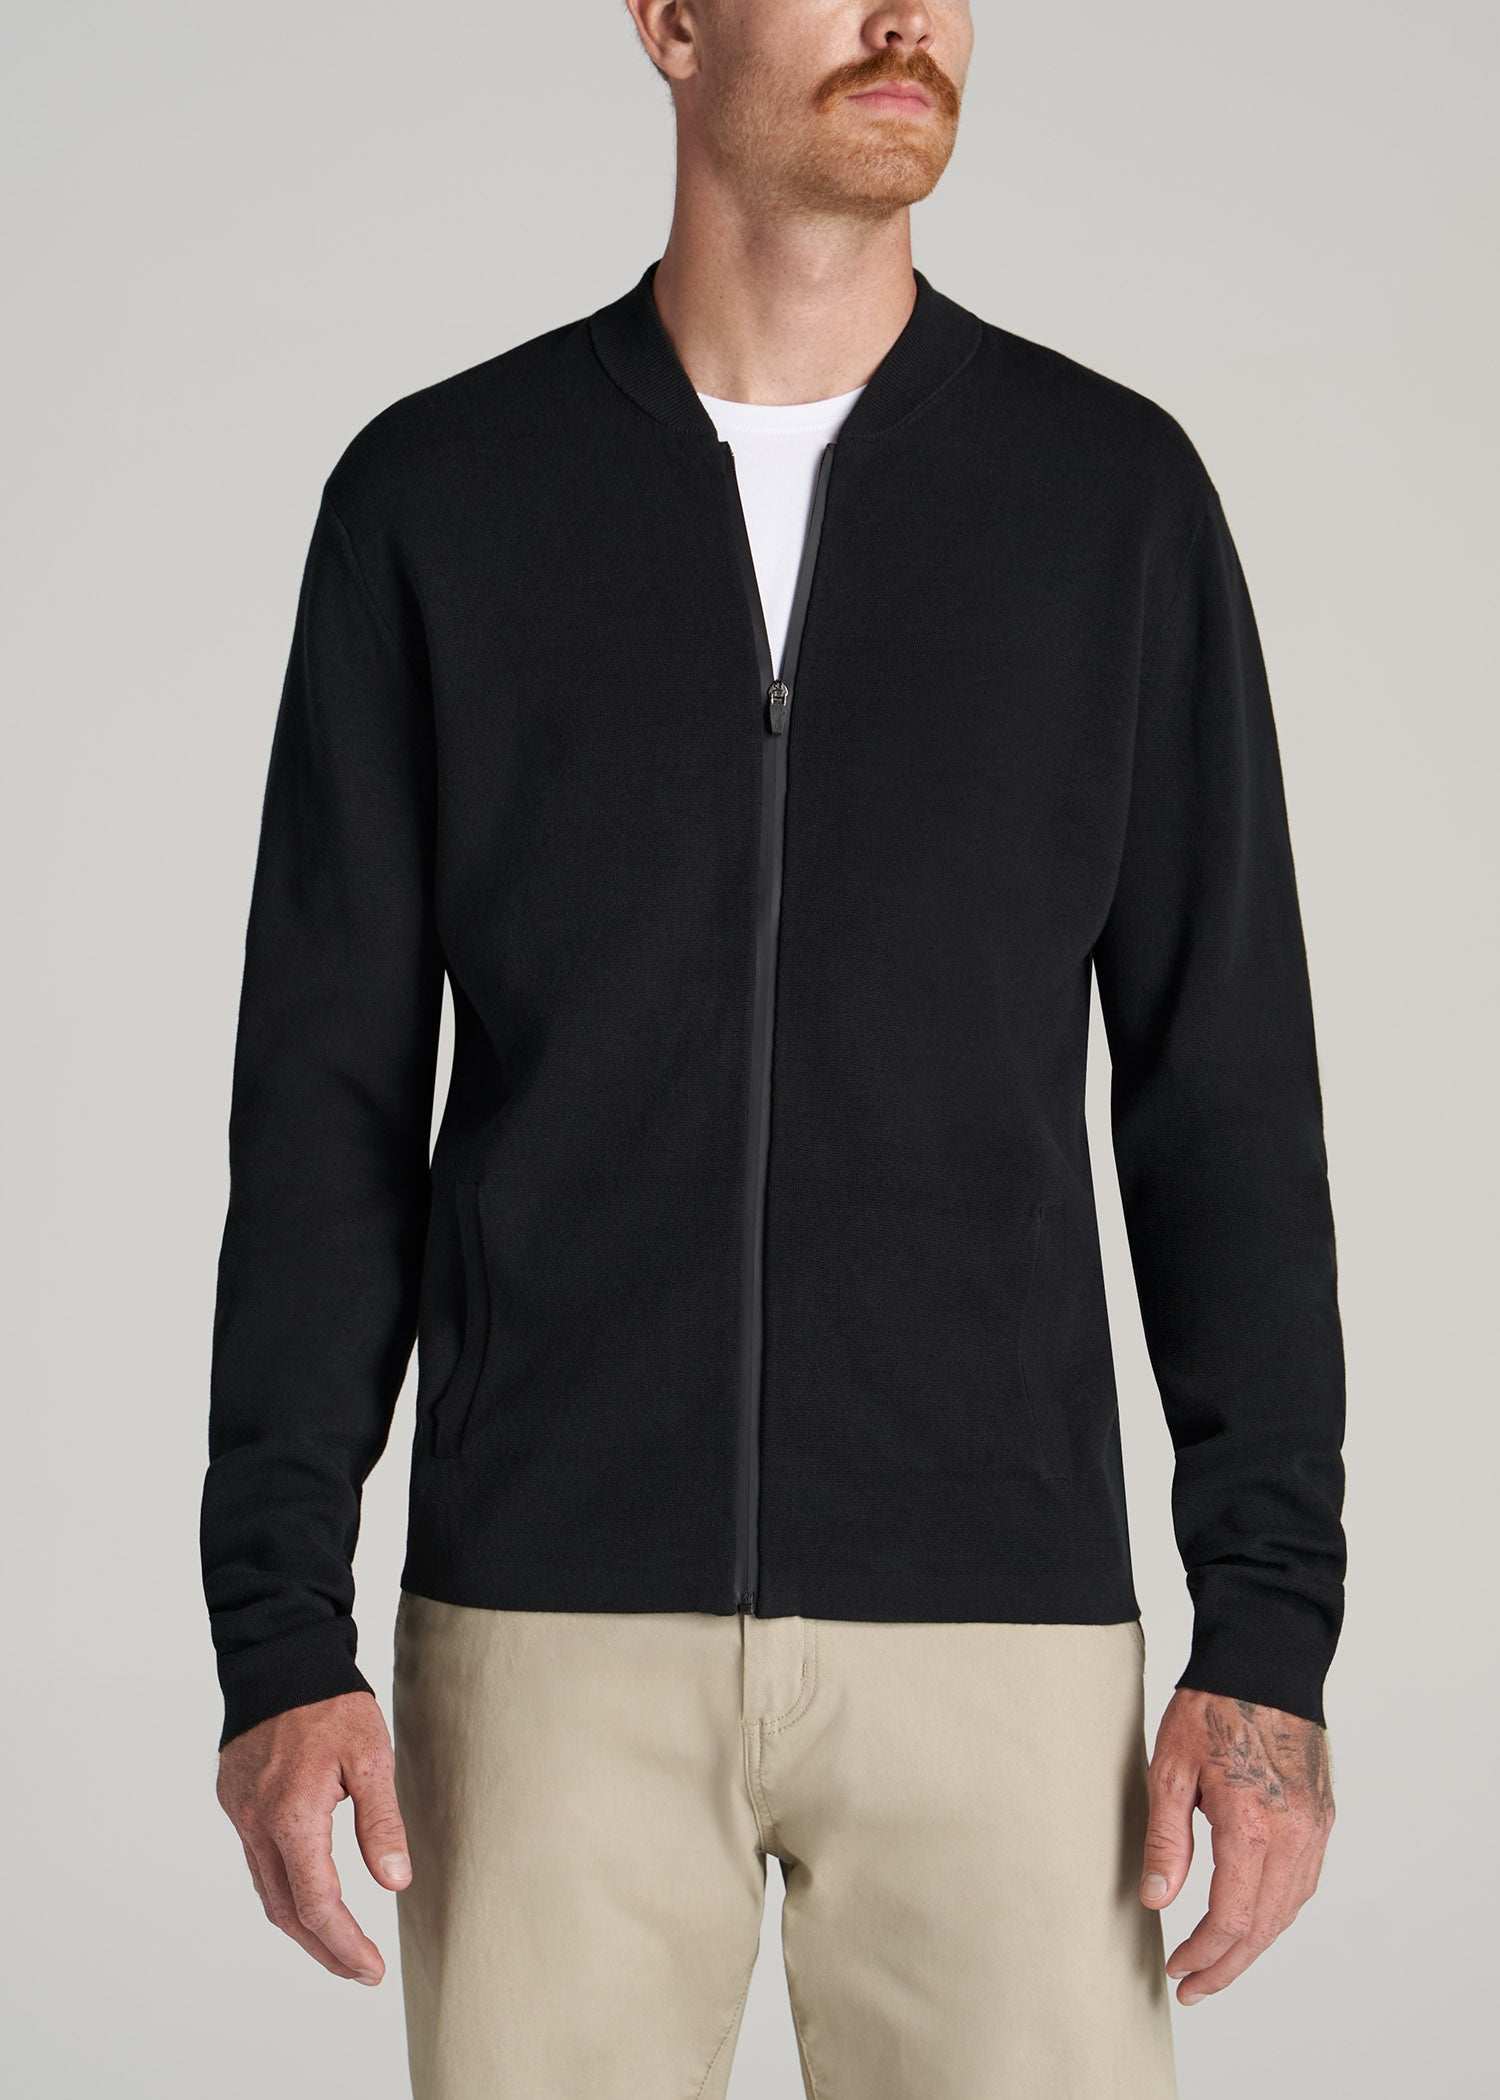 Men's Full Zip Sweater: Tall Full-Zip Charcoal Mix Sweater